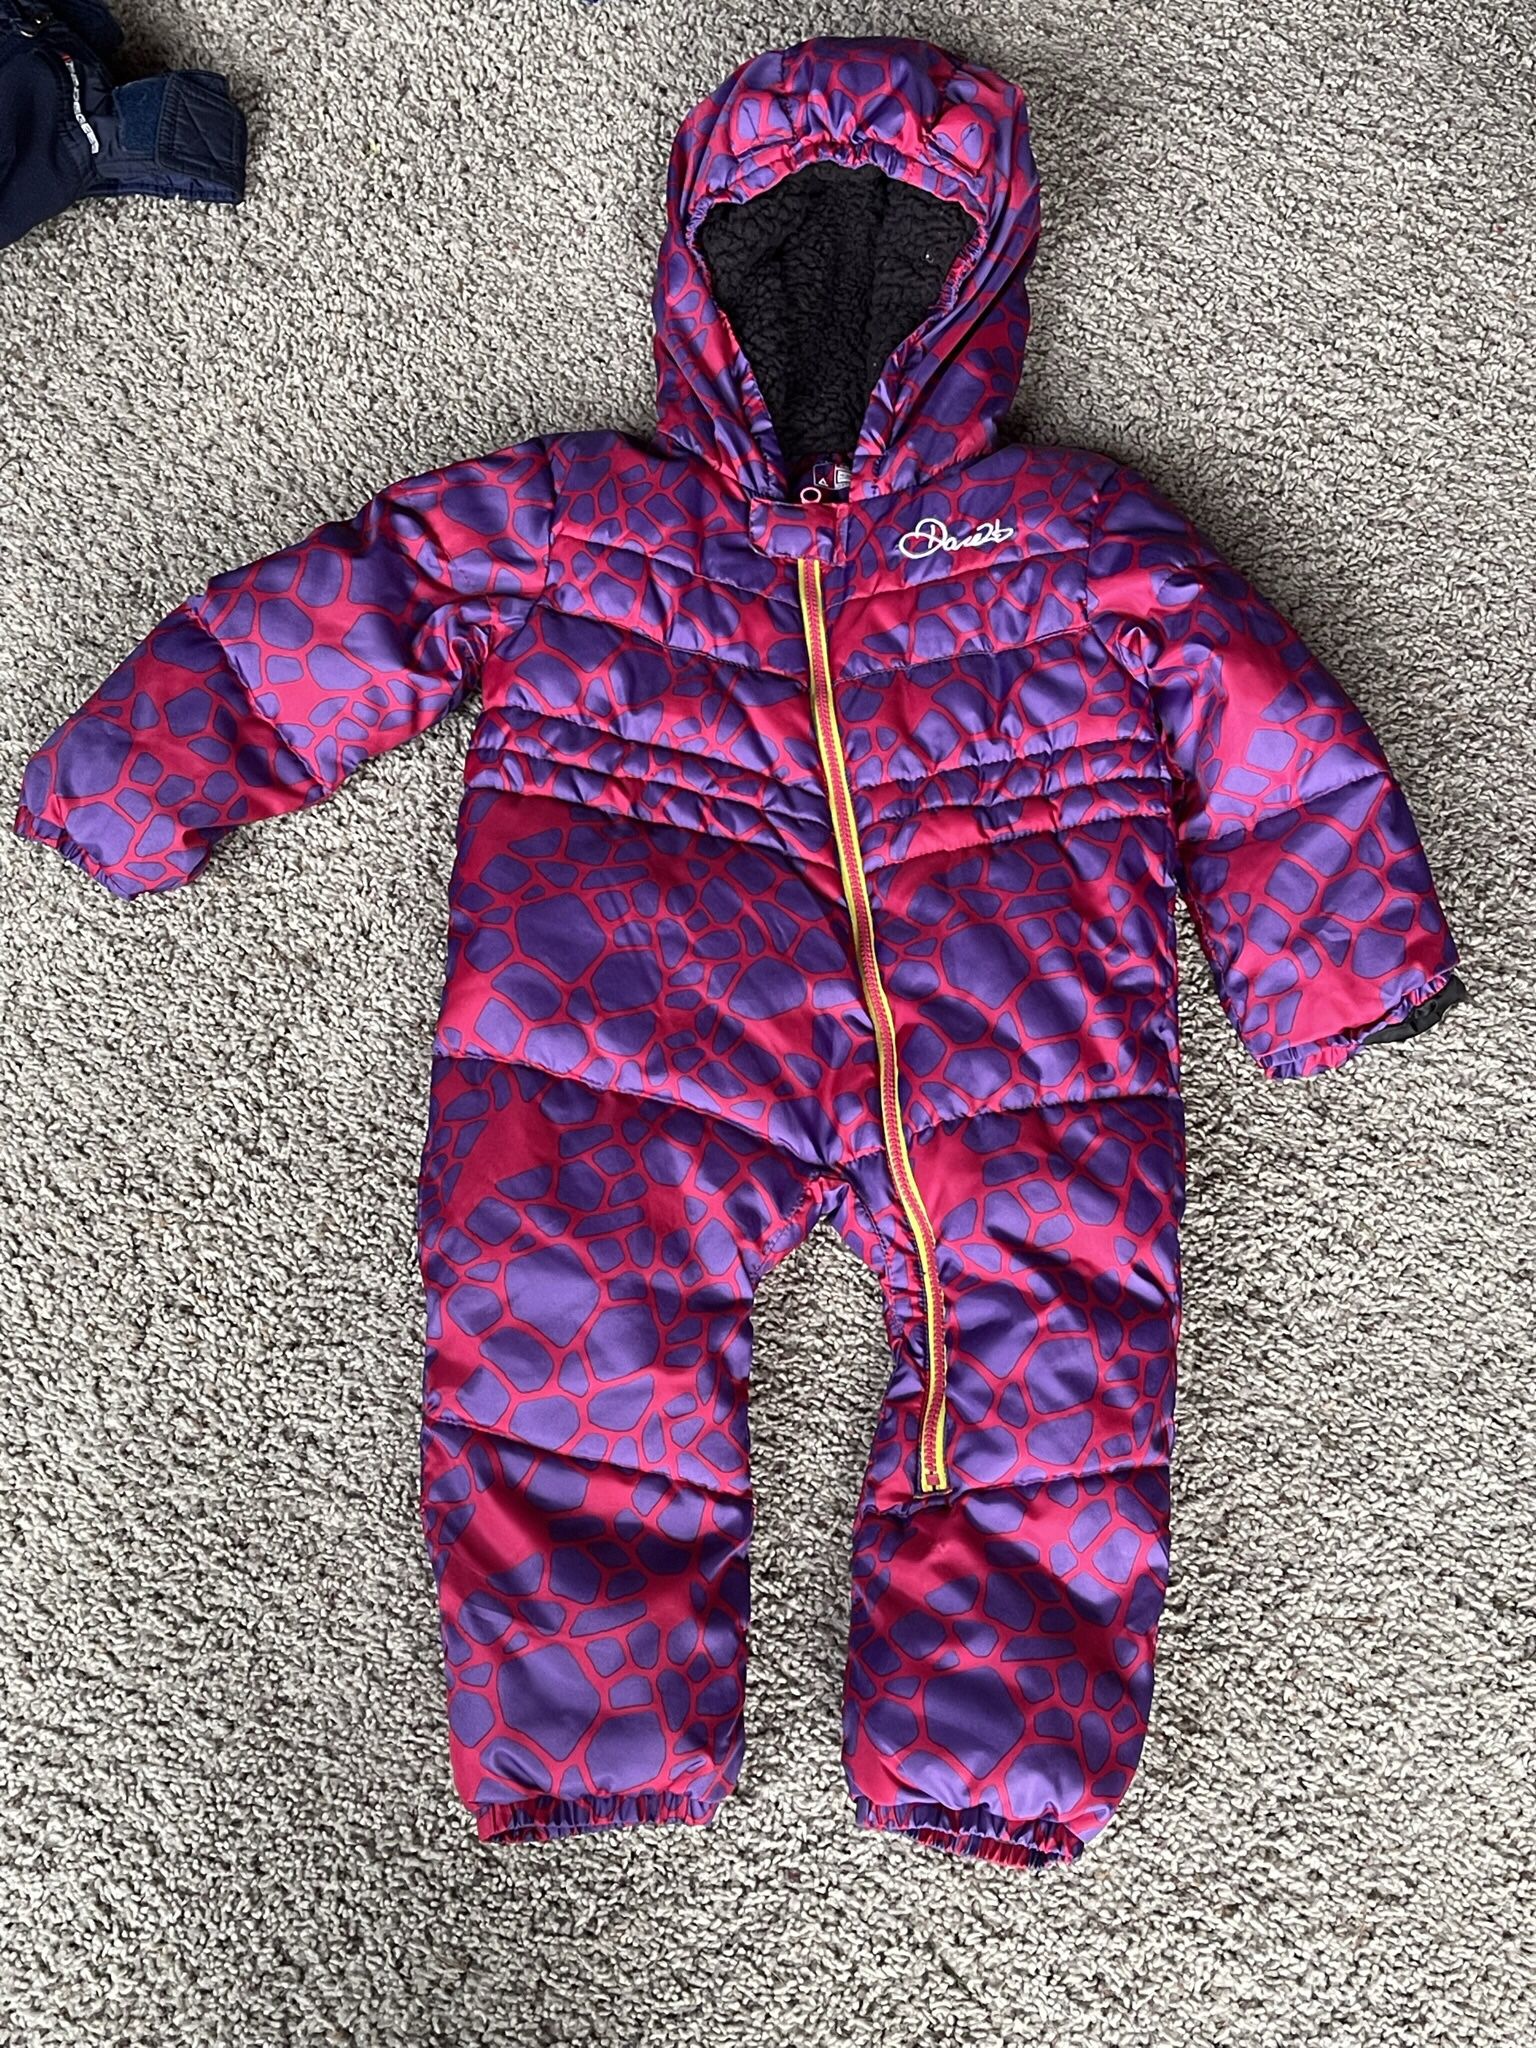 36-48 Months (3/4T) Toddler Snow Suit